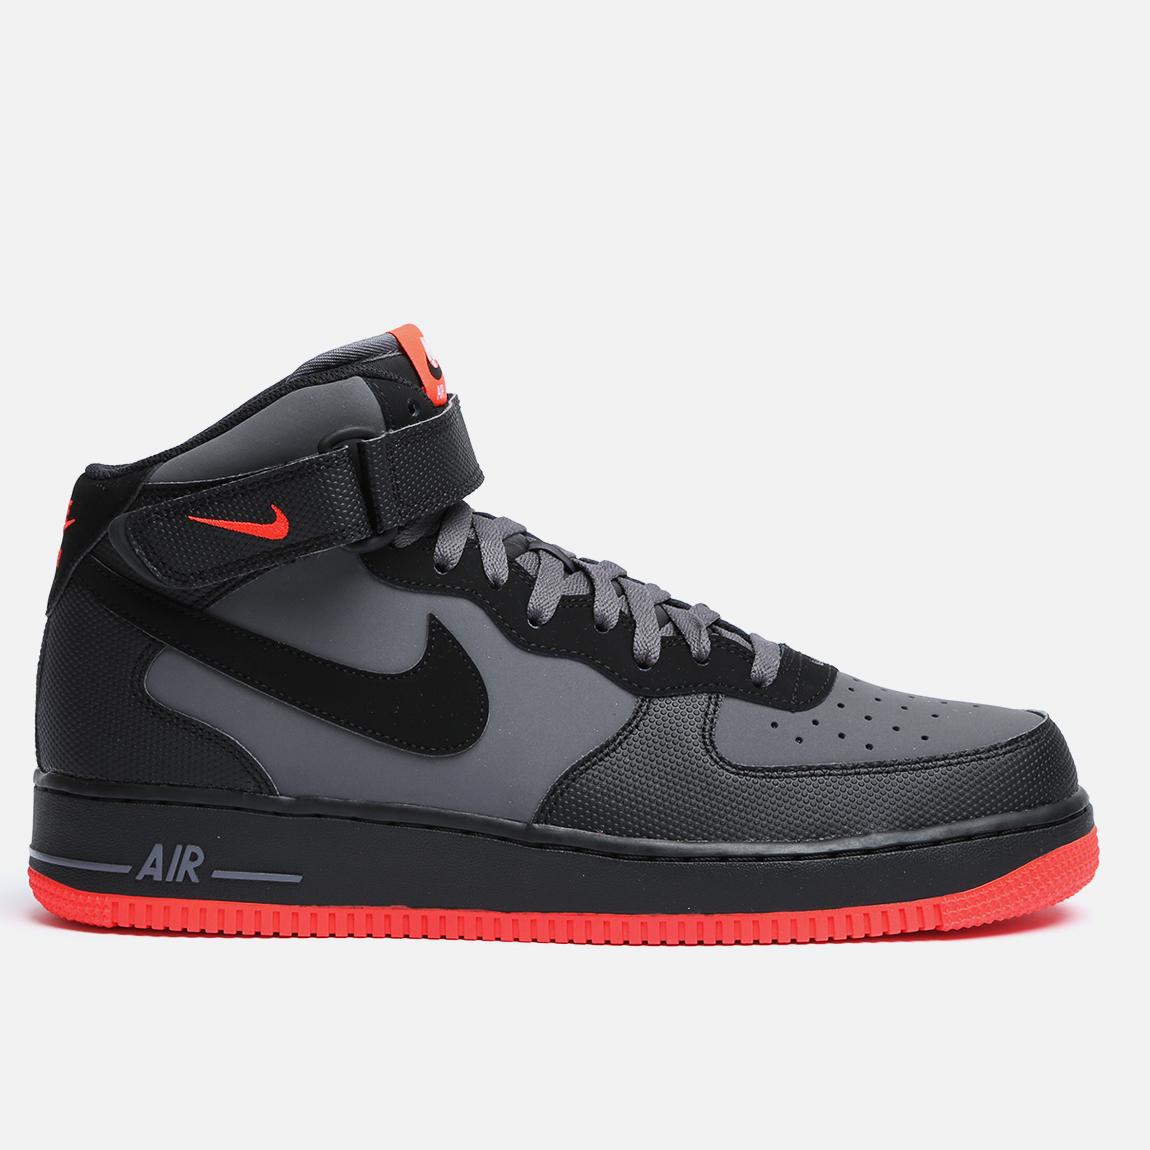 Air Force 1 High '07 - red/black Nike Sneakers | Superbalist.com